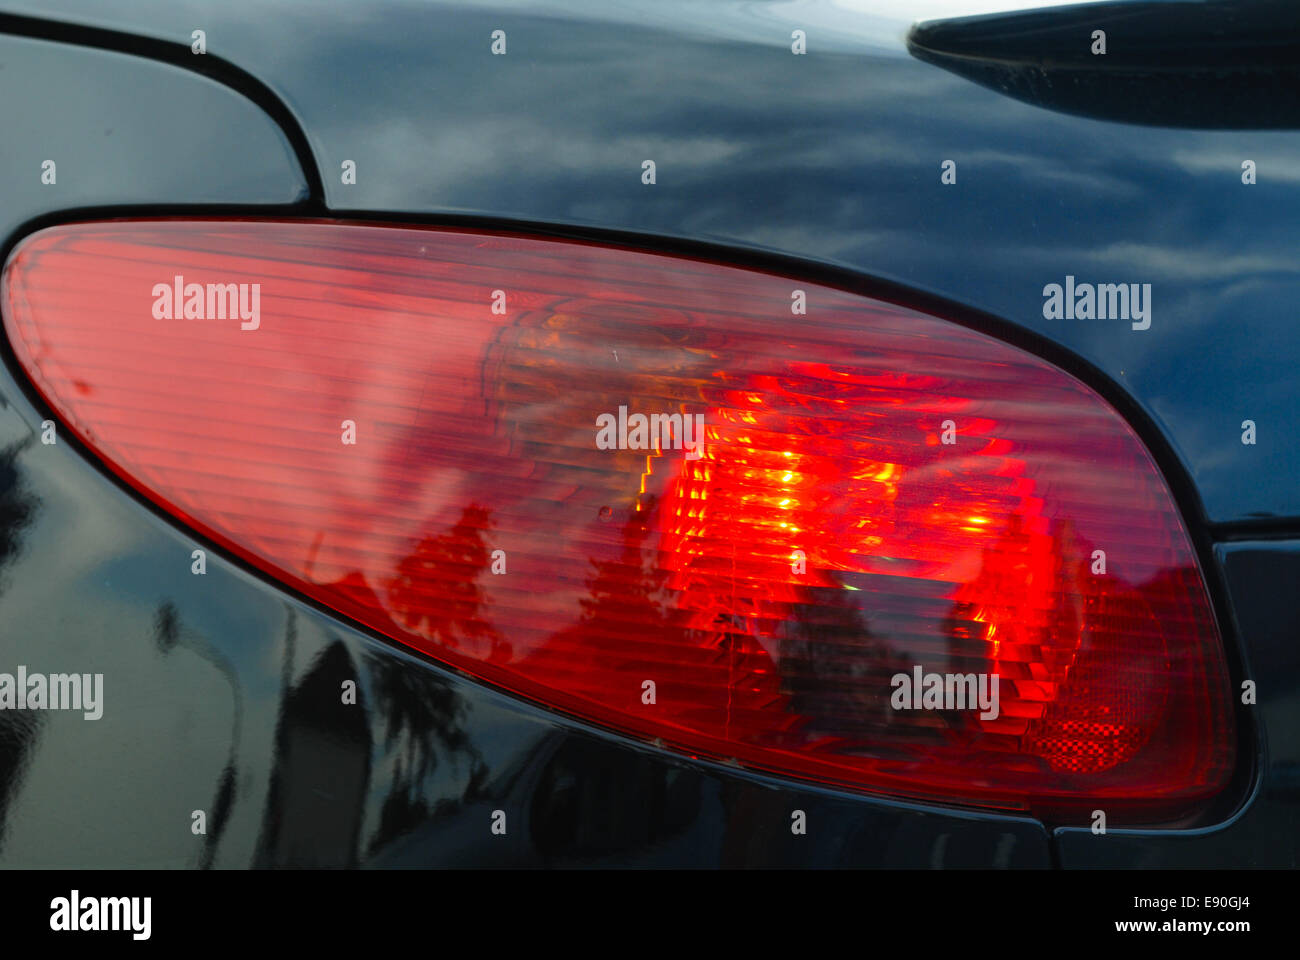 Brake light on the car Stock Photo